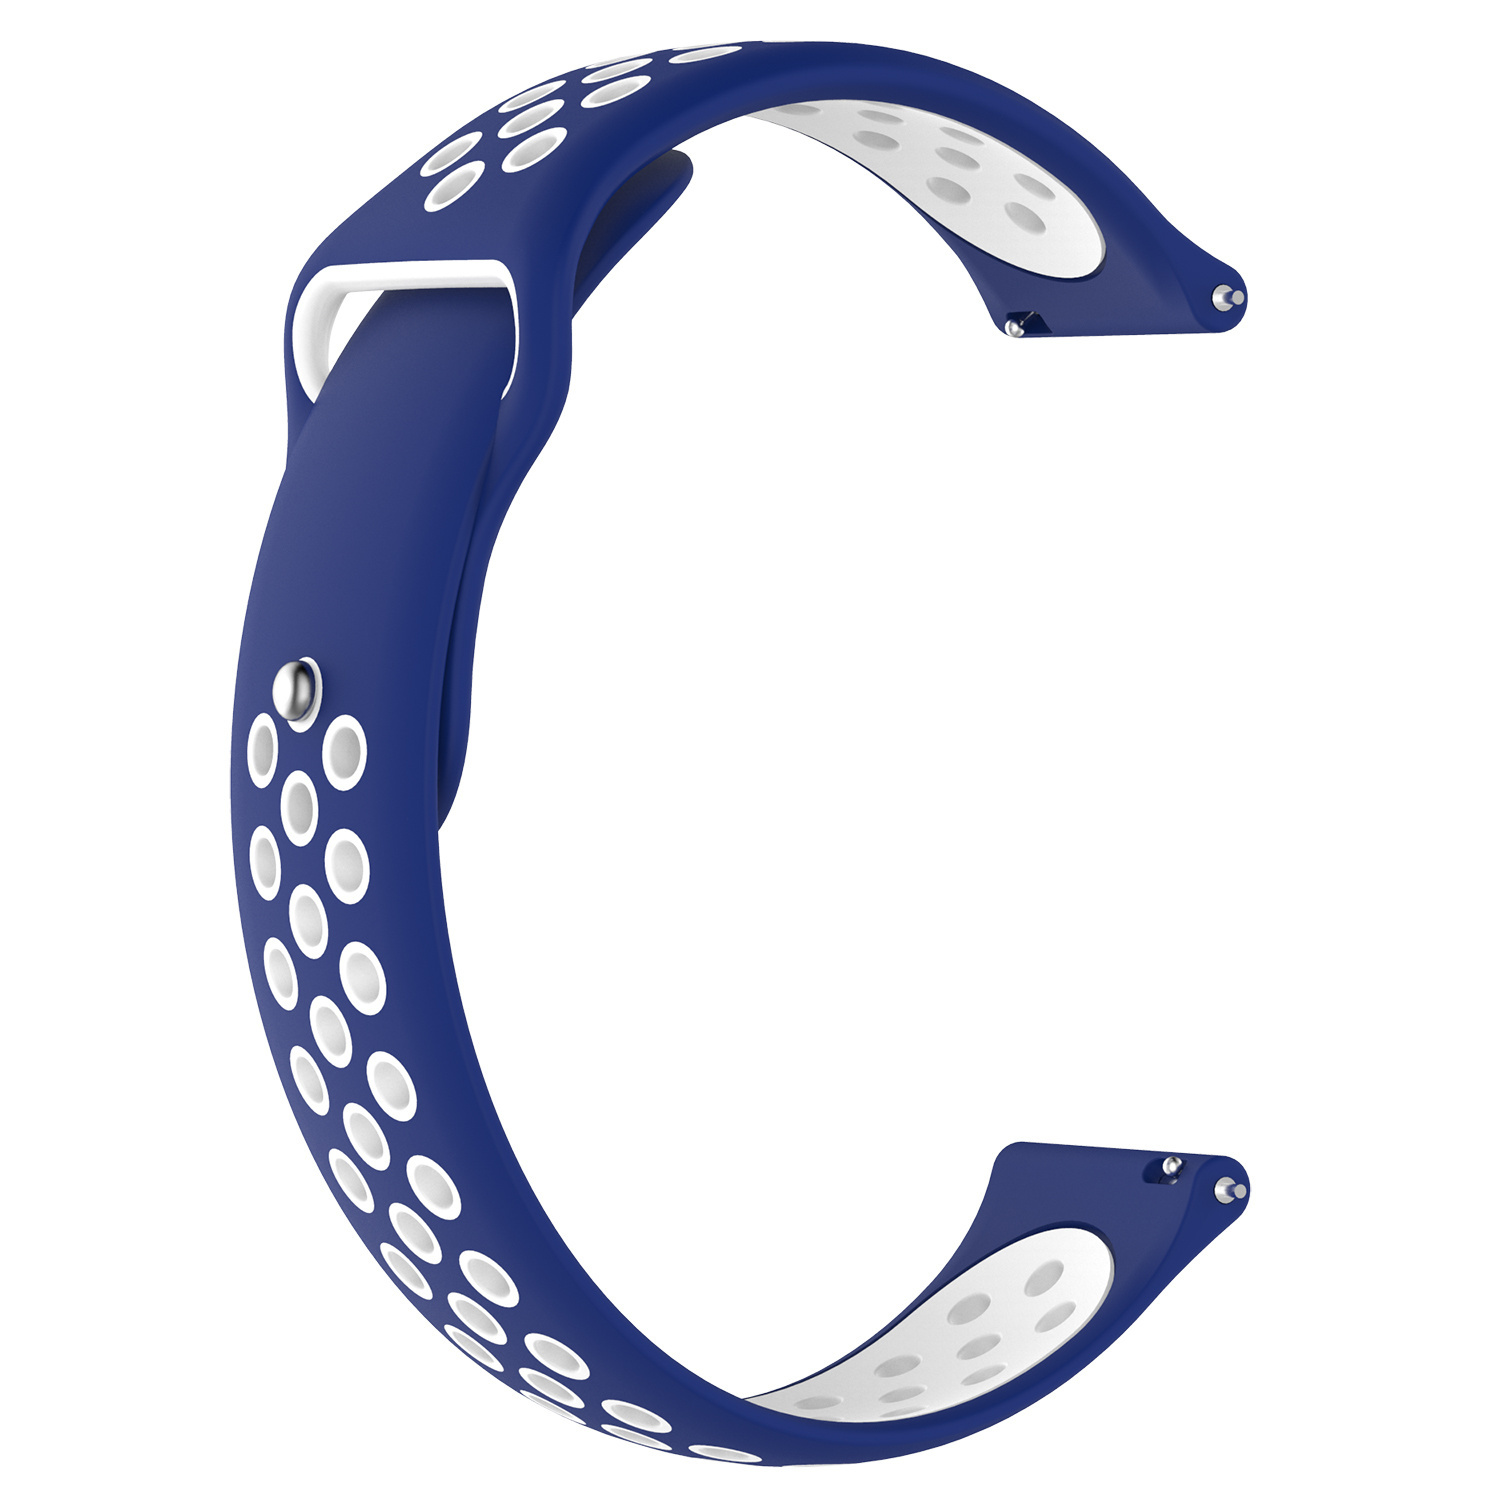 Huawei Watch GT dupla sport szalag - kék fehér